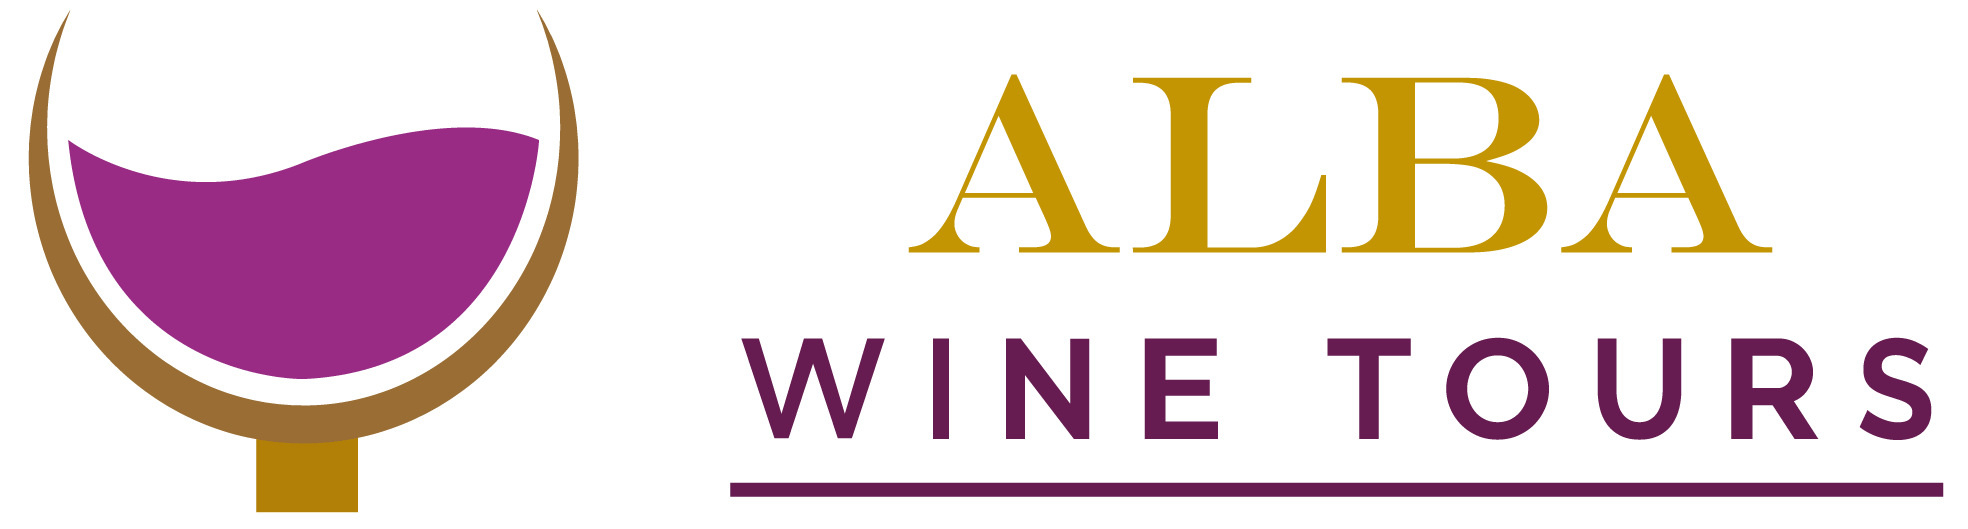 hd Logo travel langhe taxi alba wine tours